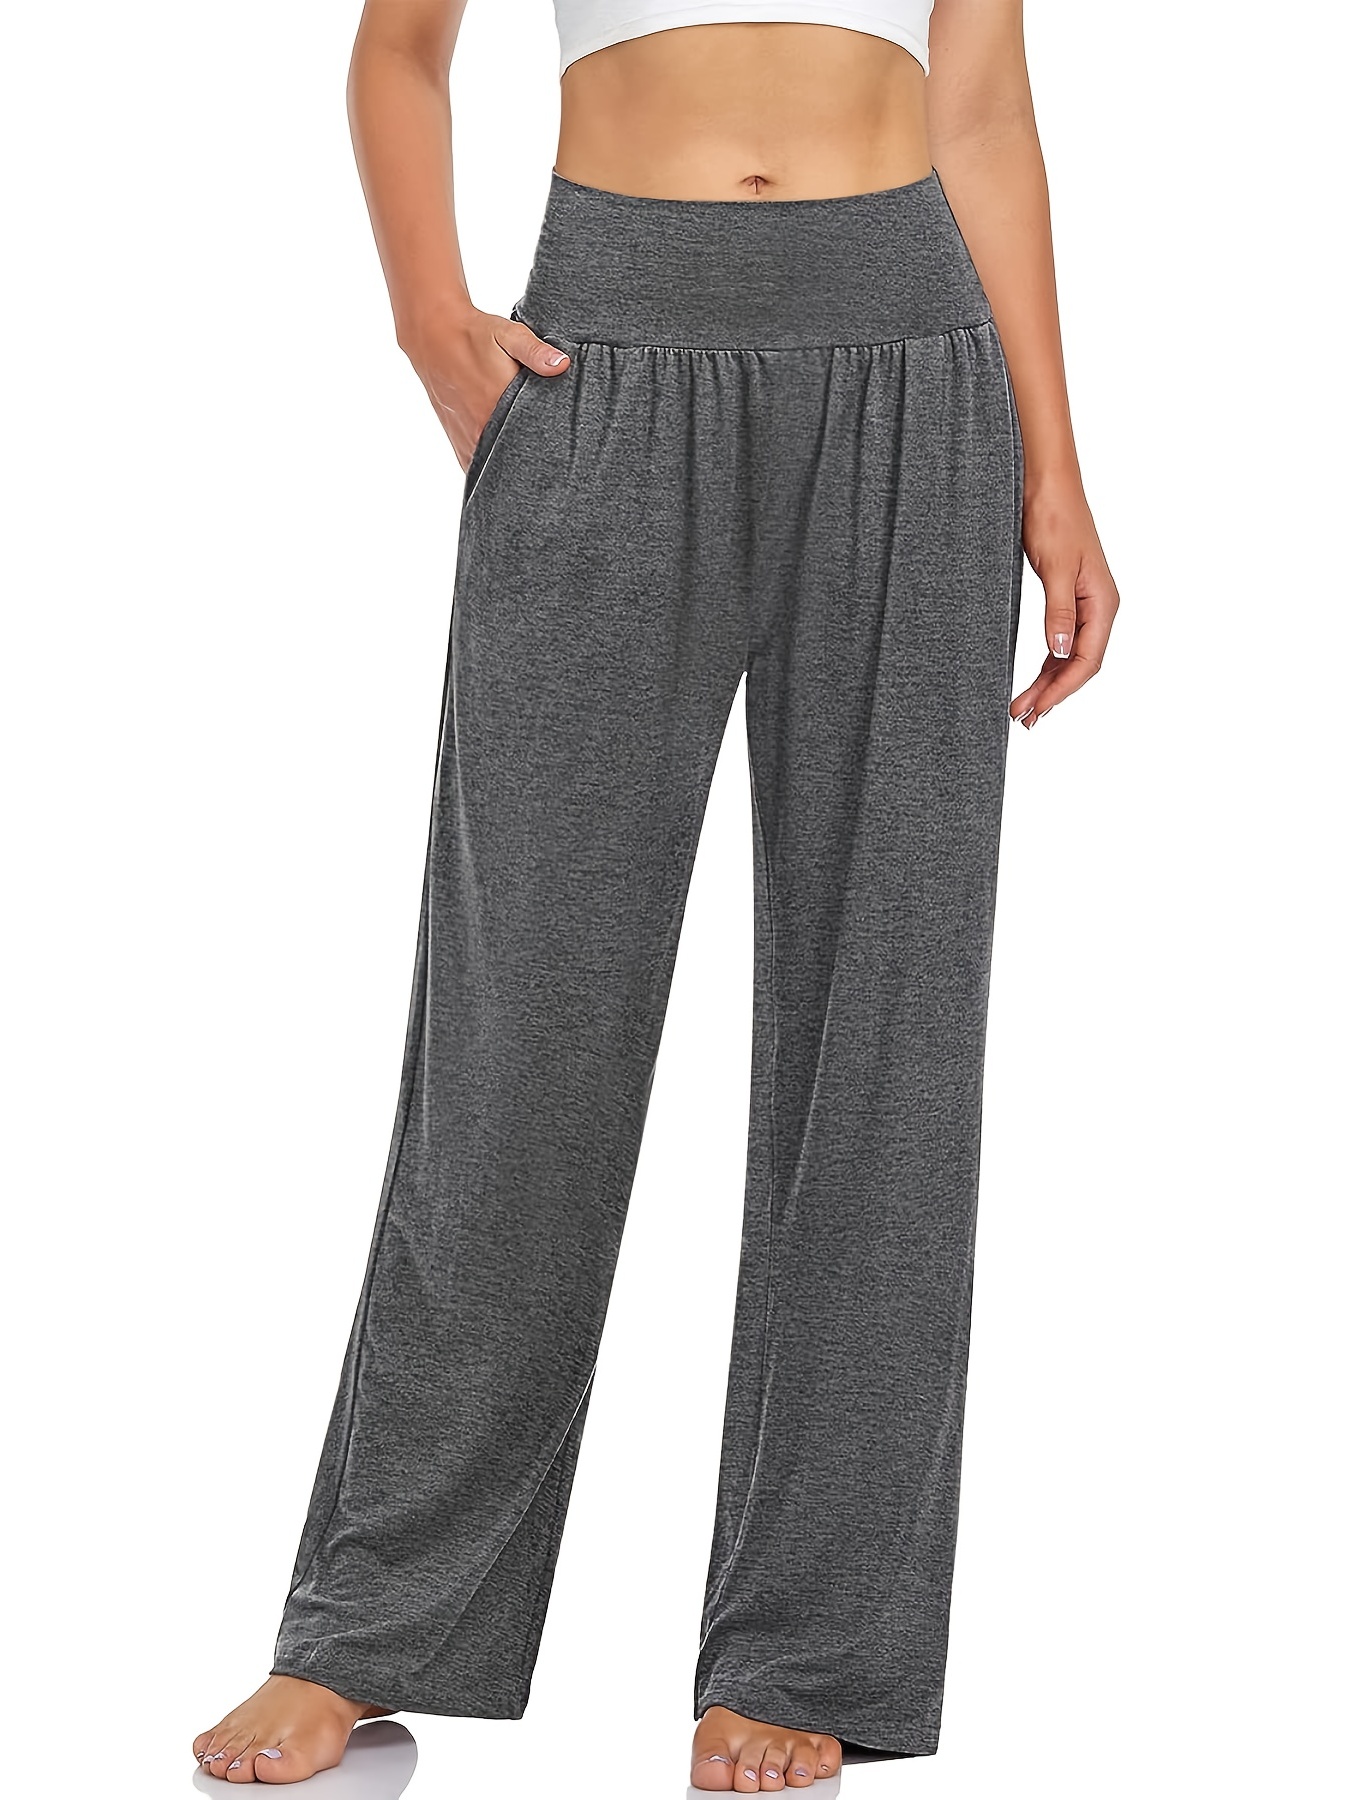 Women's Mountain Treetop Print Pocket Sports Running Yoga Athletic Pants  Full Length Pants womens linen pants 